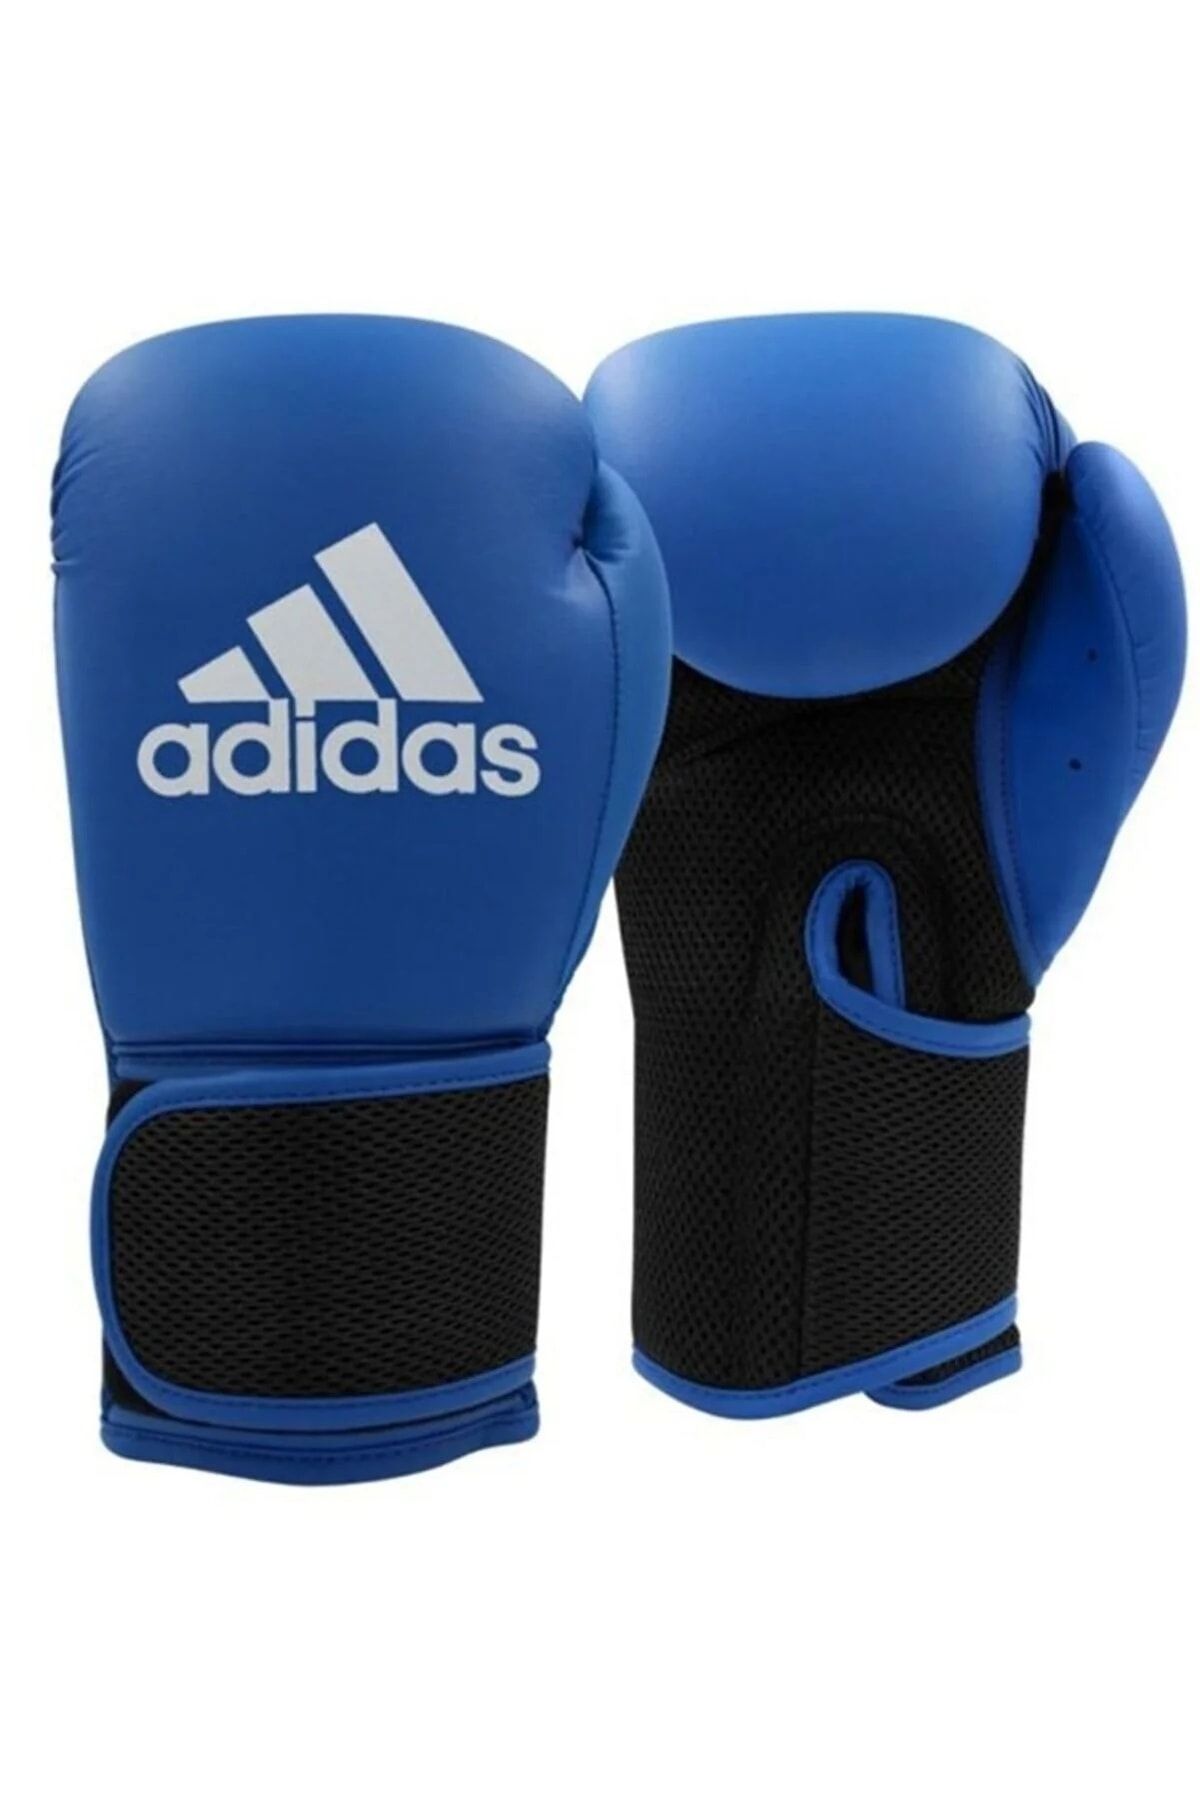 adidas Suni Deri Adıh25 Hybrid 25 Boks Eldiveni Boxing Gloves Mavi